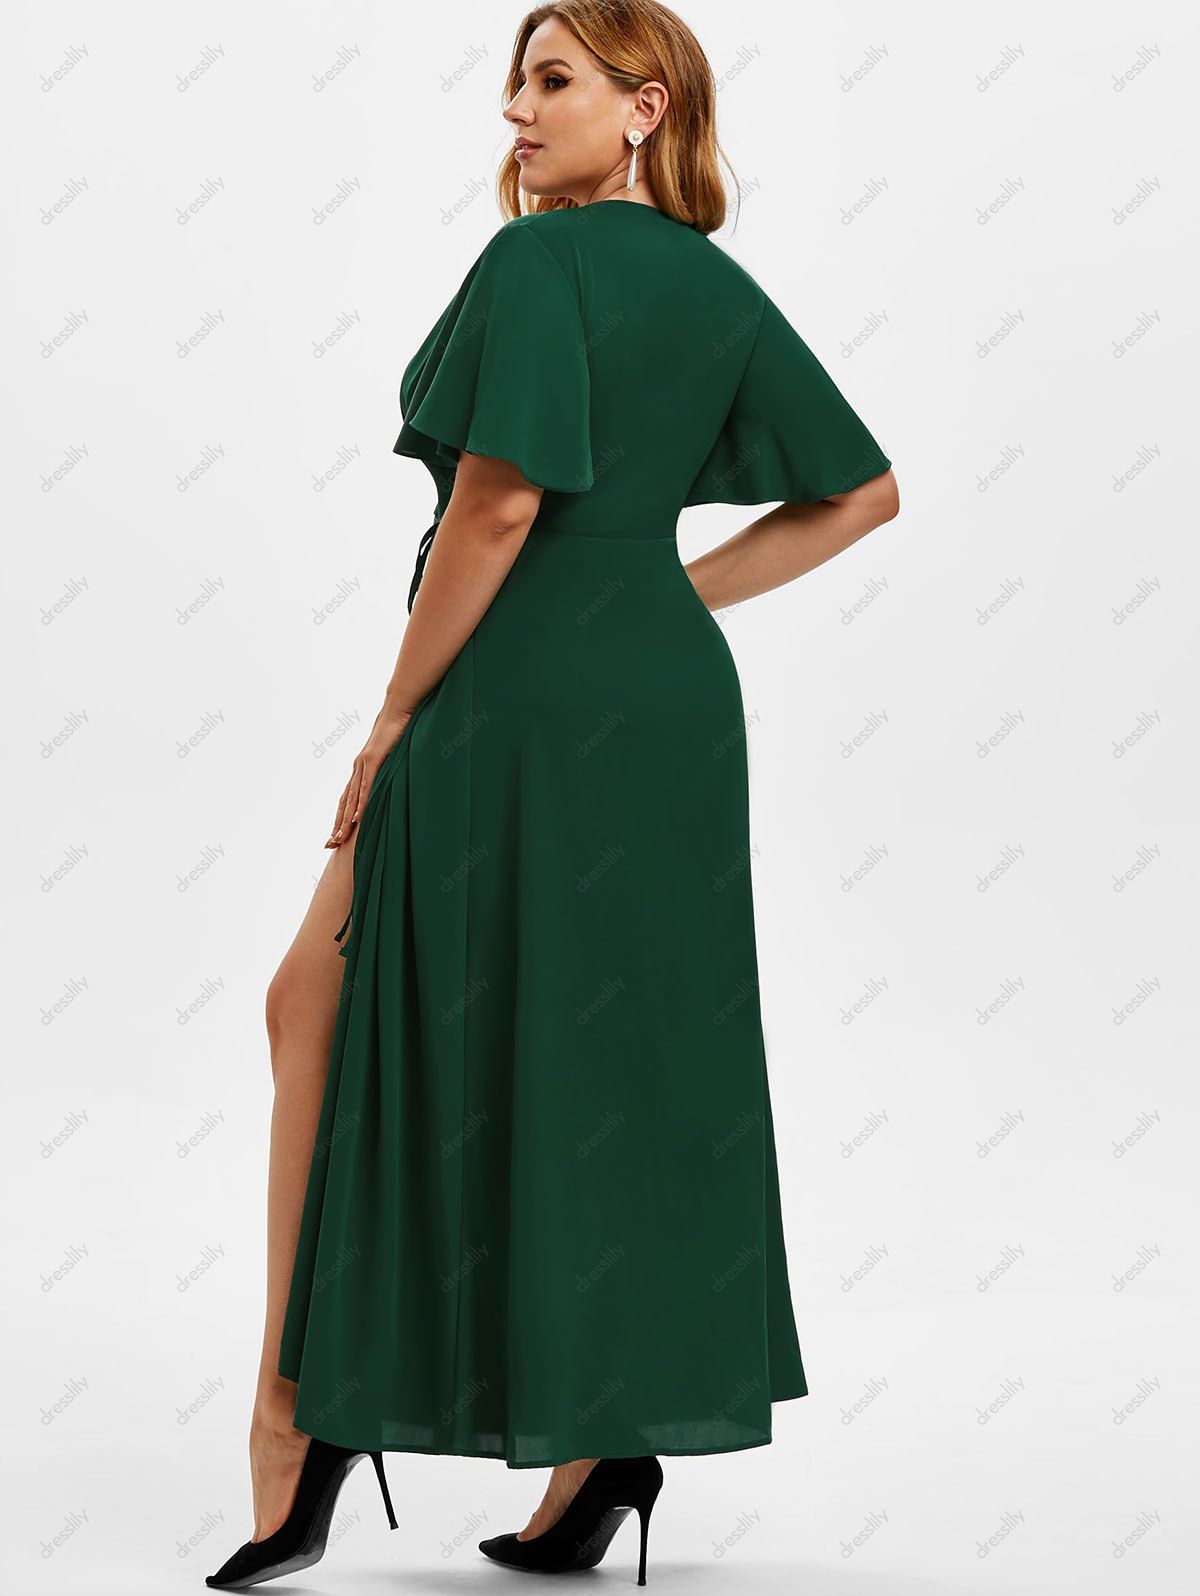 [32% OFF] 2020 Plus Size Low Cut High Slit Maxi Dress In DEEP GREEN ...